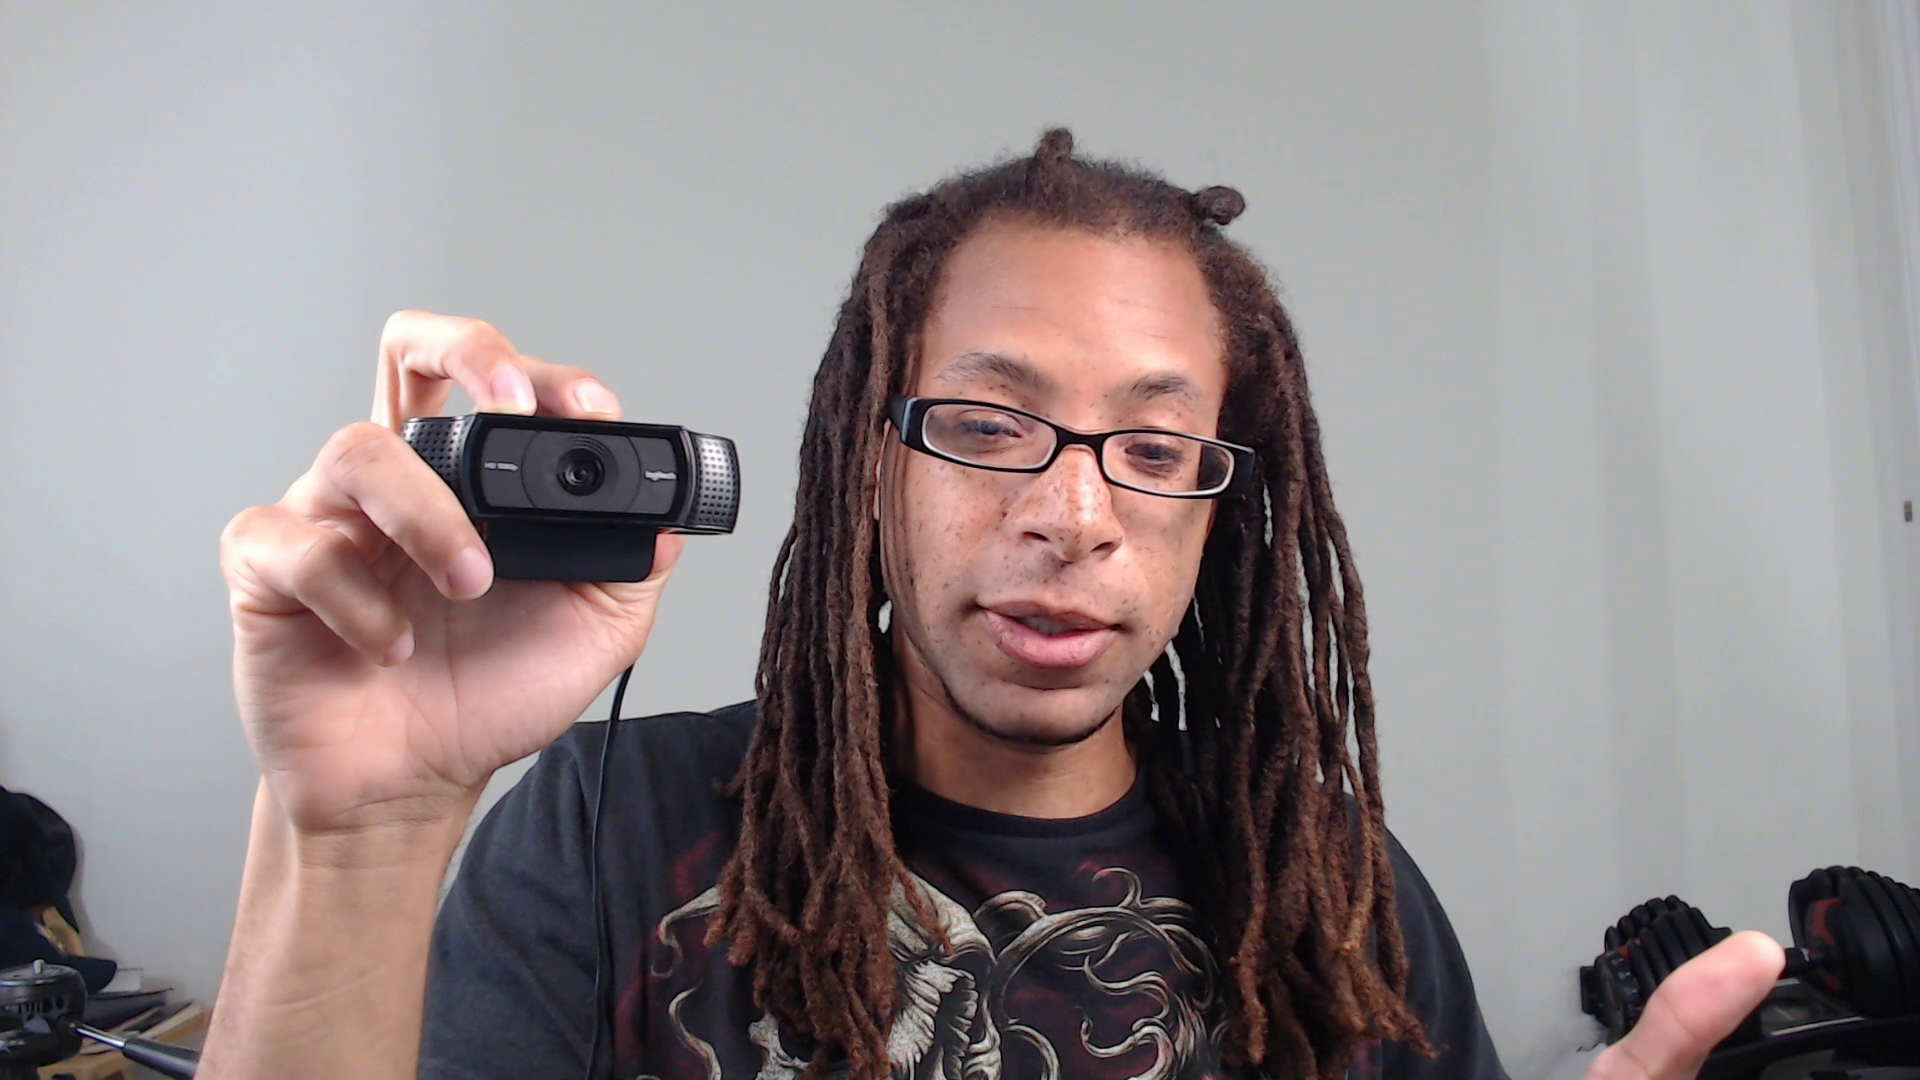 Logitech C920 HD Webcam Review and Setup - C920 Video Test 